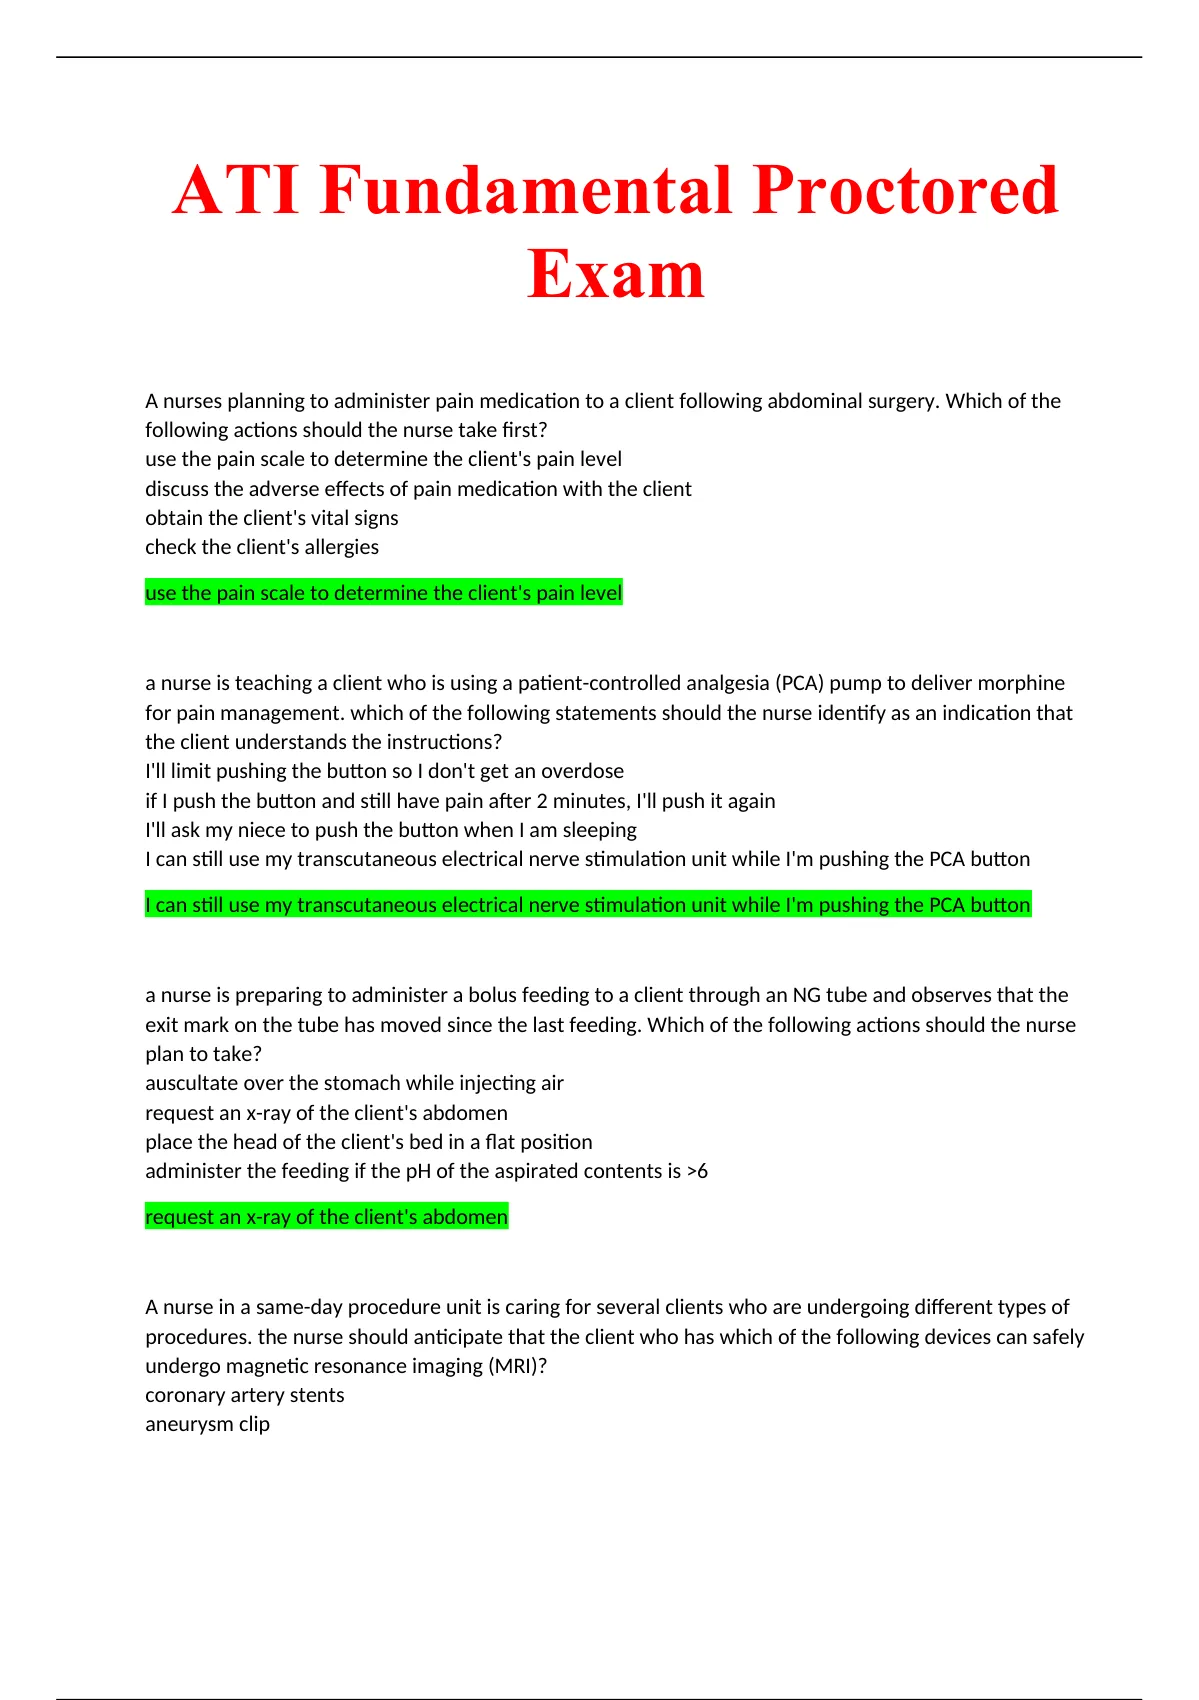 ATI Fundamental Proctored Exam Fundamentals Proctored Exam Graded A+